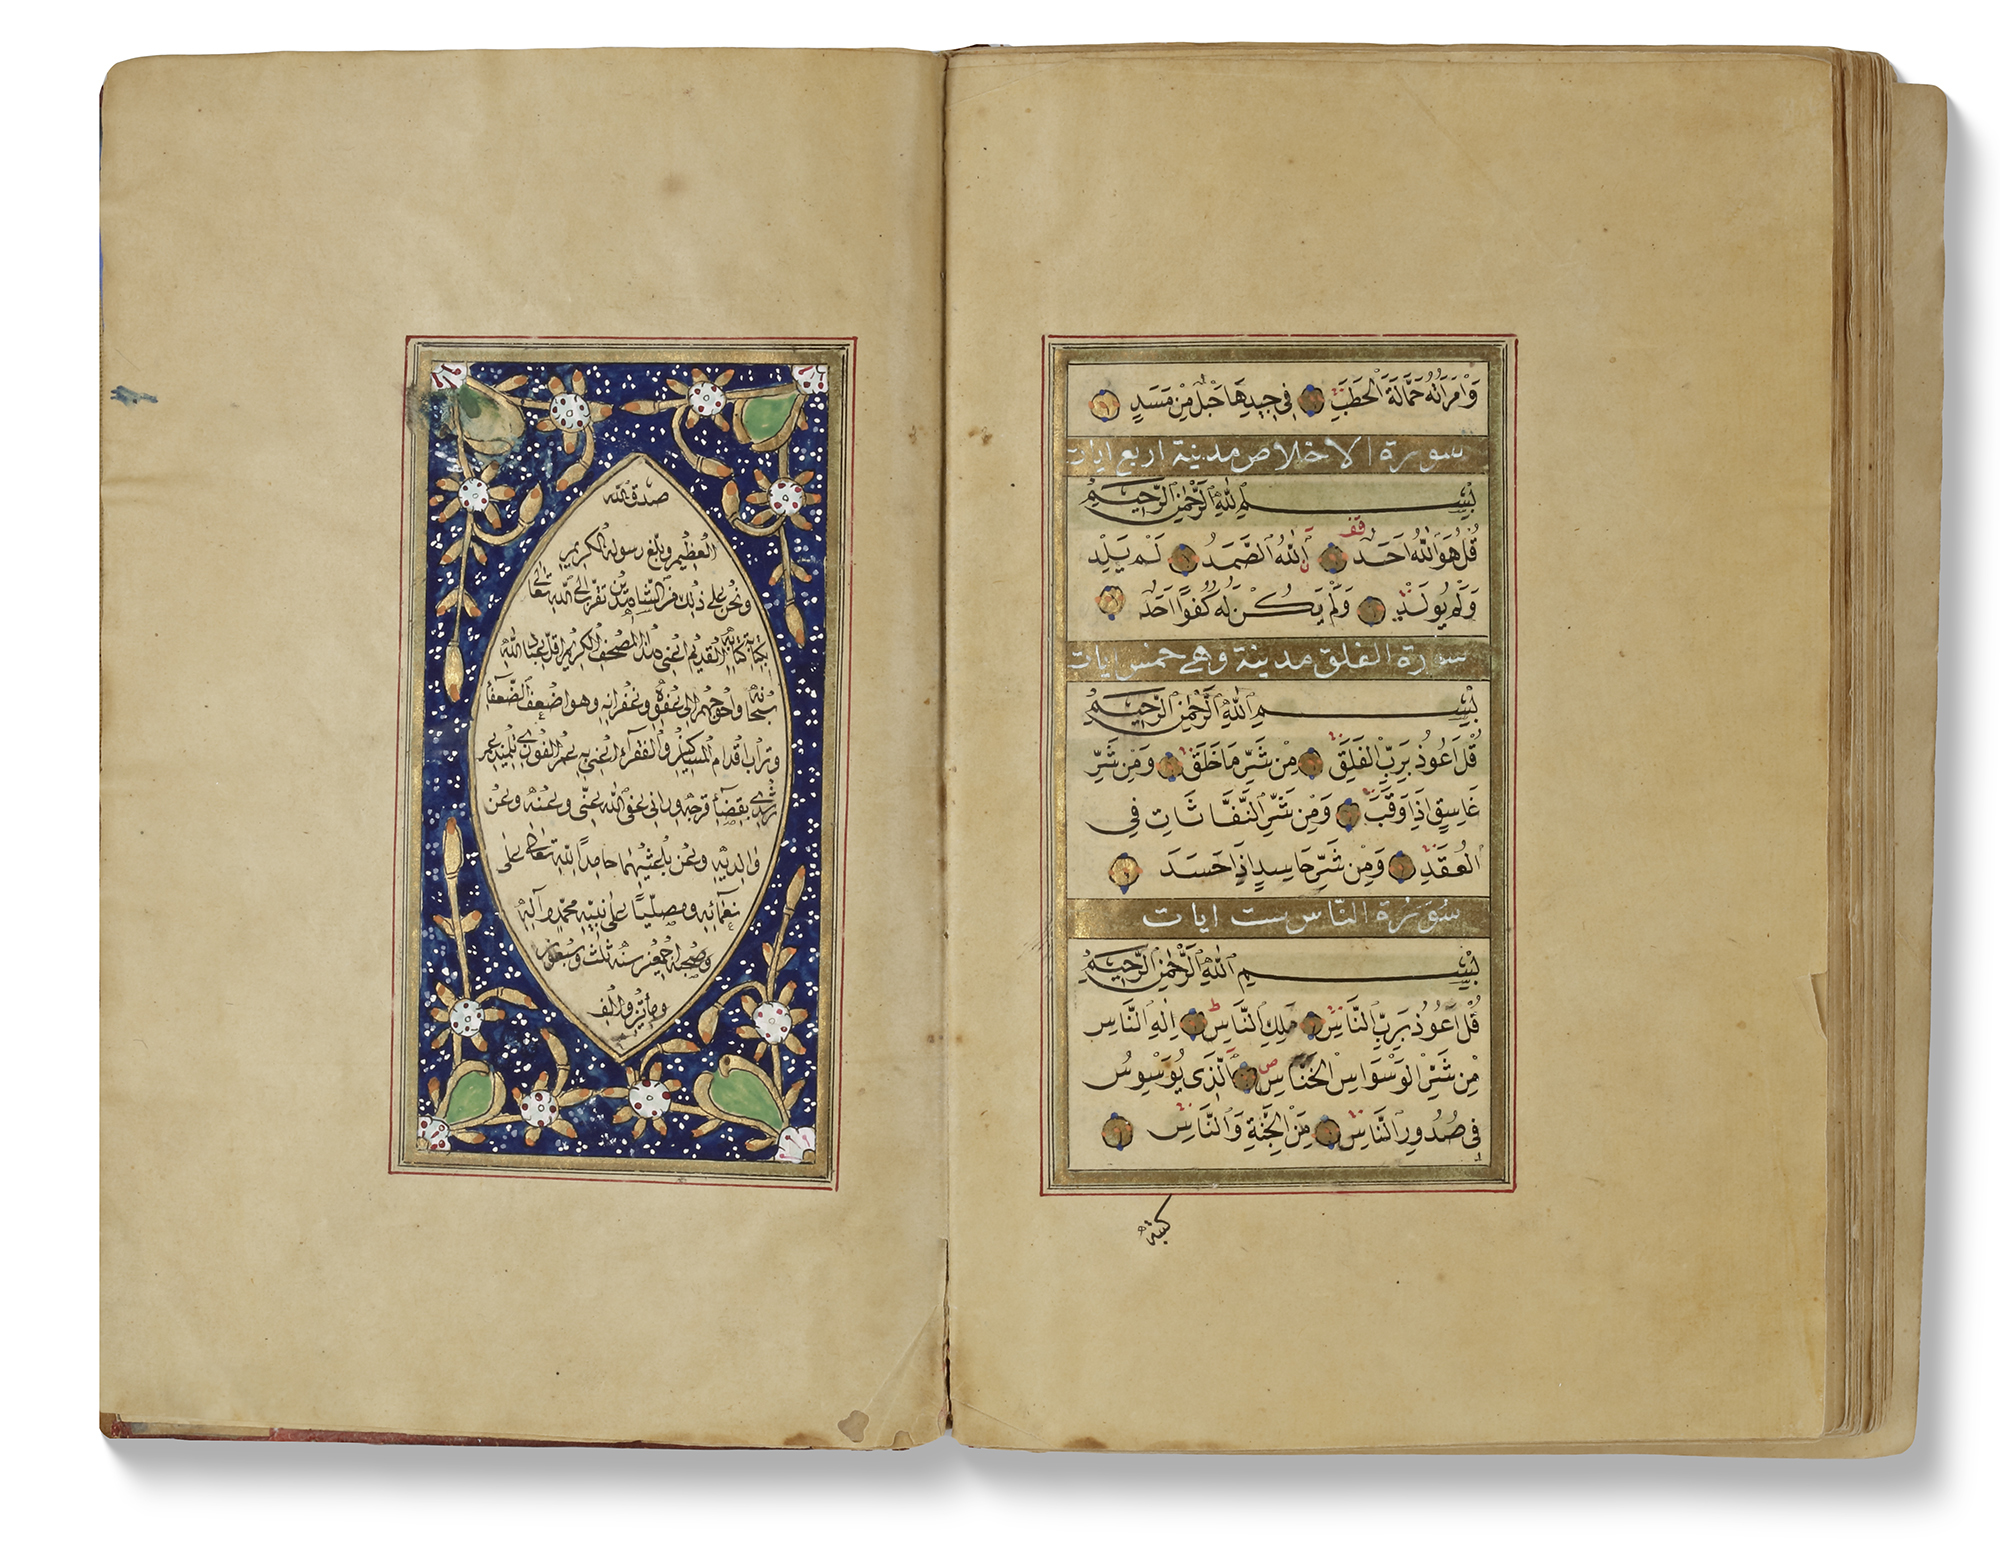 A FINE OTTOMAN QURAN, TURKEY, WRITTEN BY OMAR AL-FAWRABI STUDENT OF OMAR RUSHDI, DATED 1273 AH/1856 - Image 18 of 20